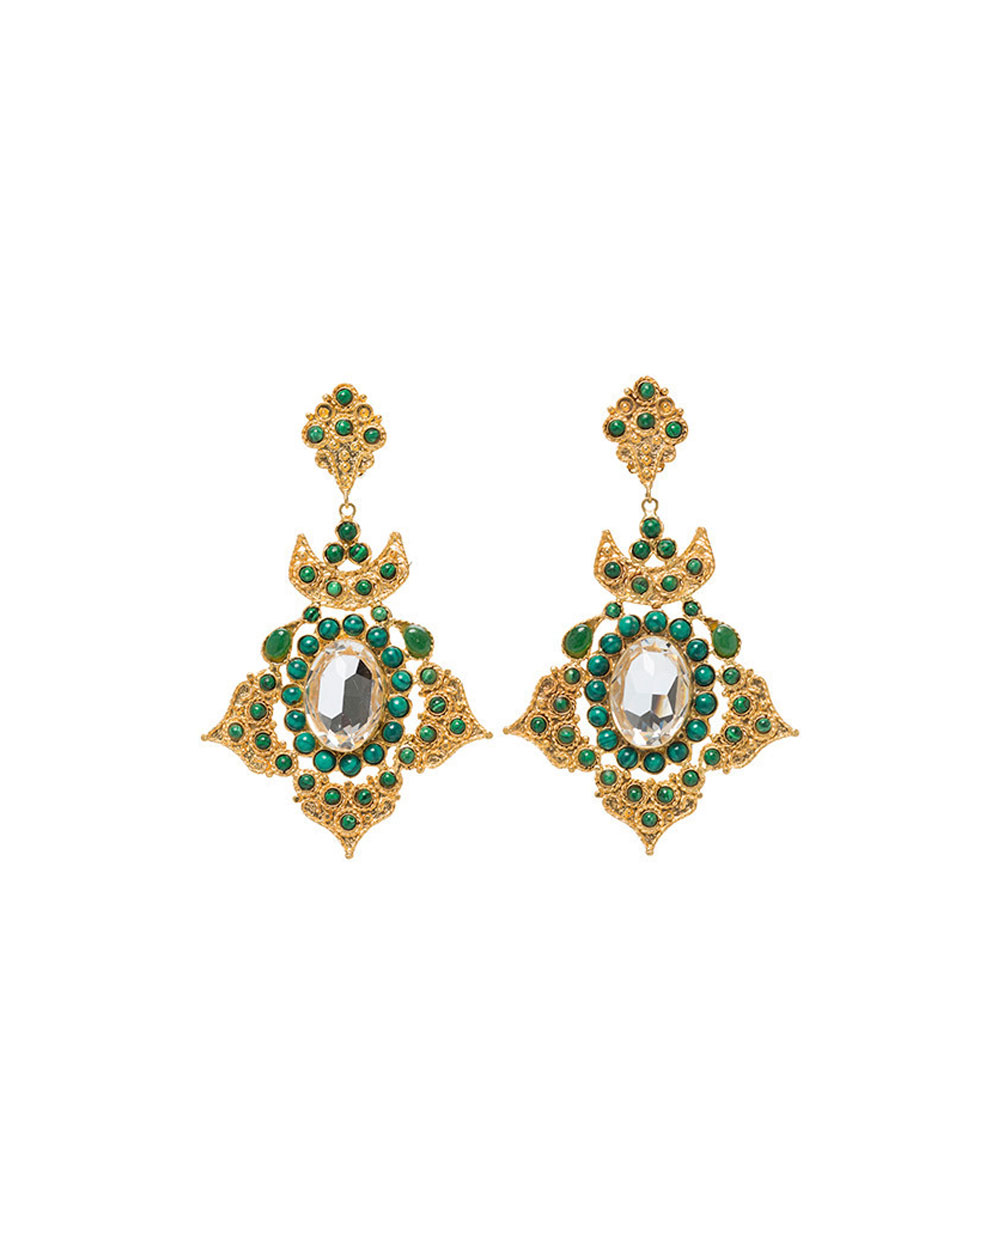 Christie Nicolaides Ariadne earrings